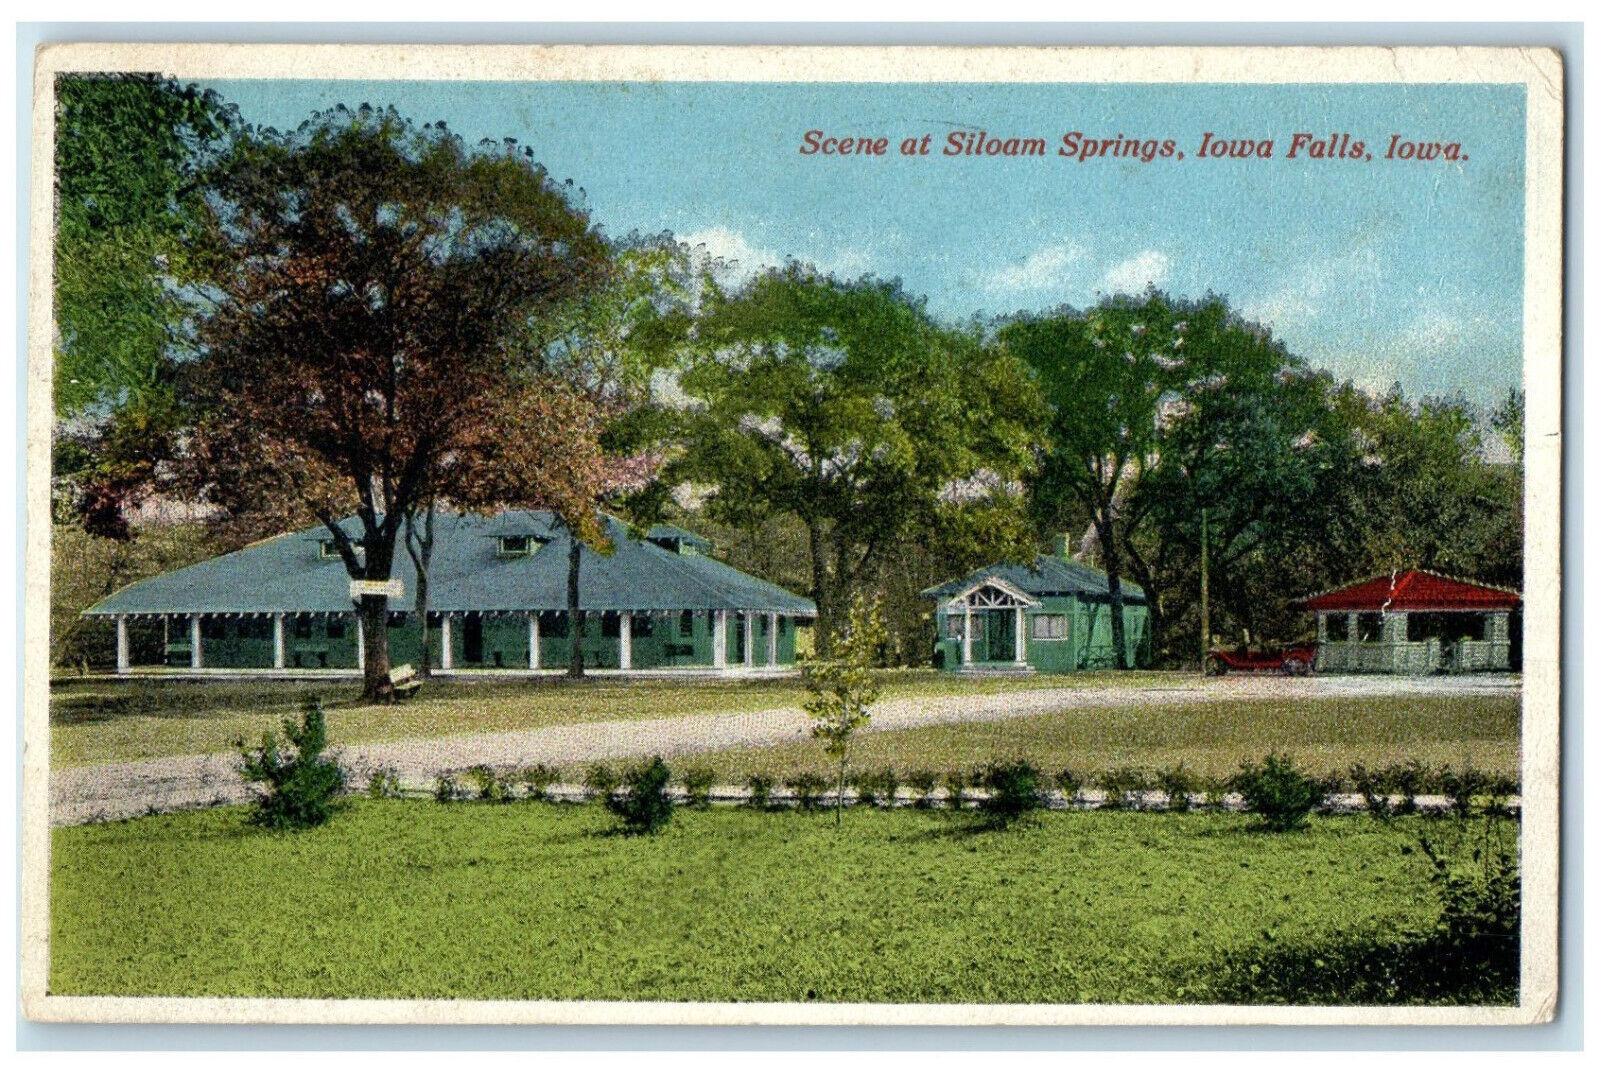 1915 Scene at Siloam Springs Building View Iowa Falls Iowa IA Postcard